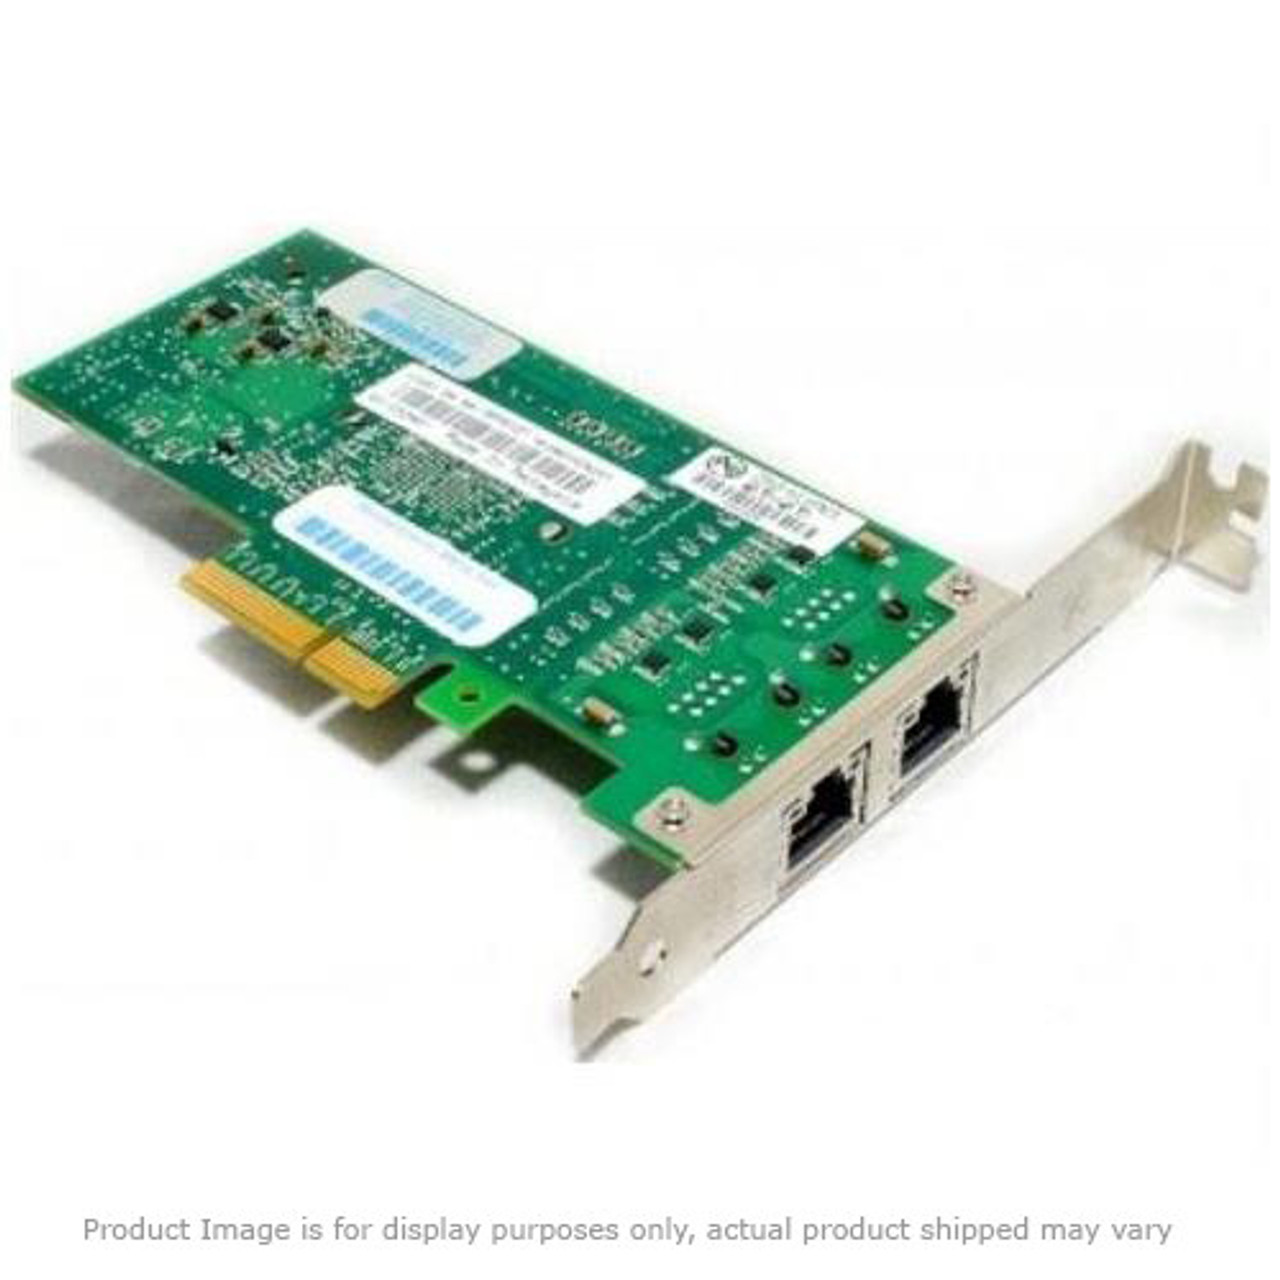 A0C2326 Intel Ethernet PCI/II 10/100 T Adapter Card